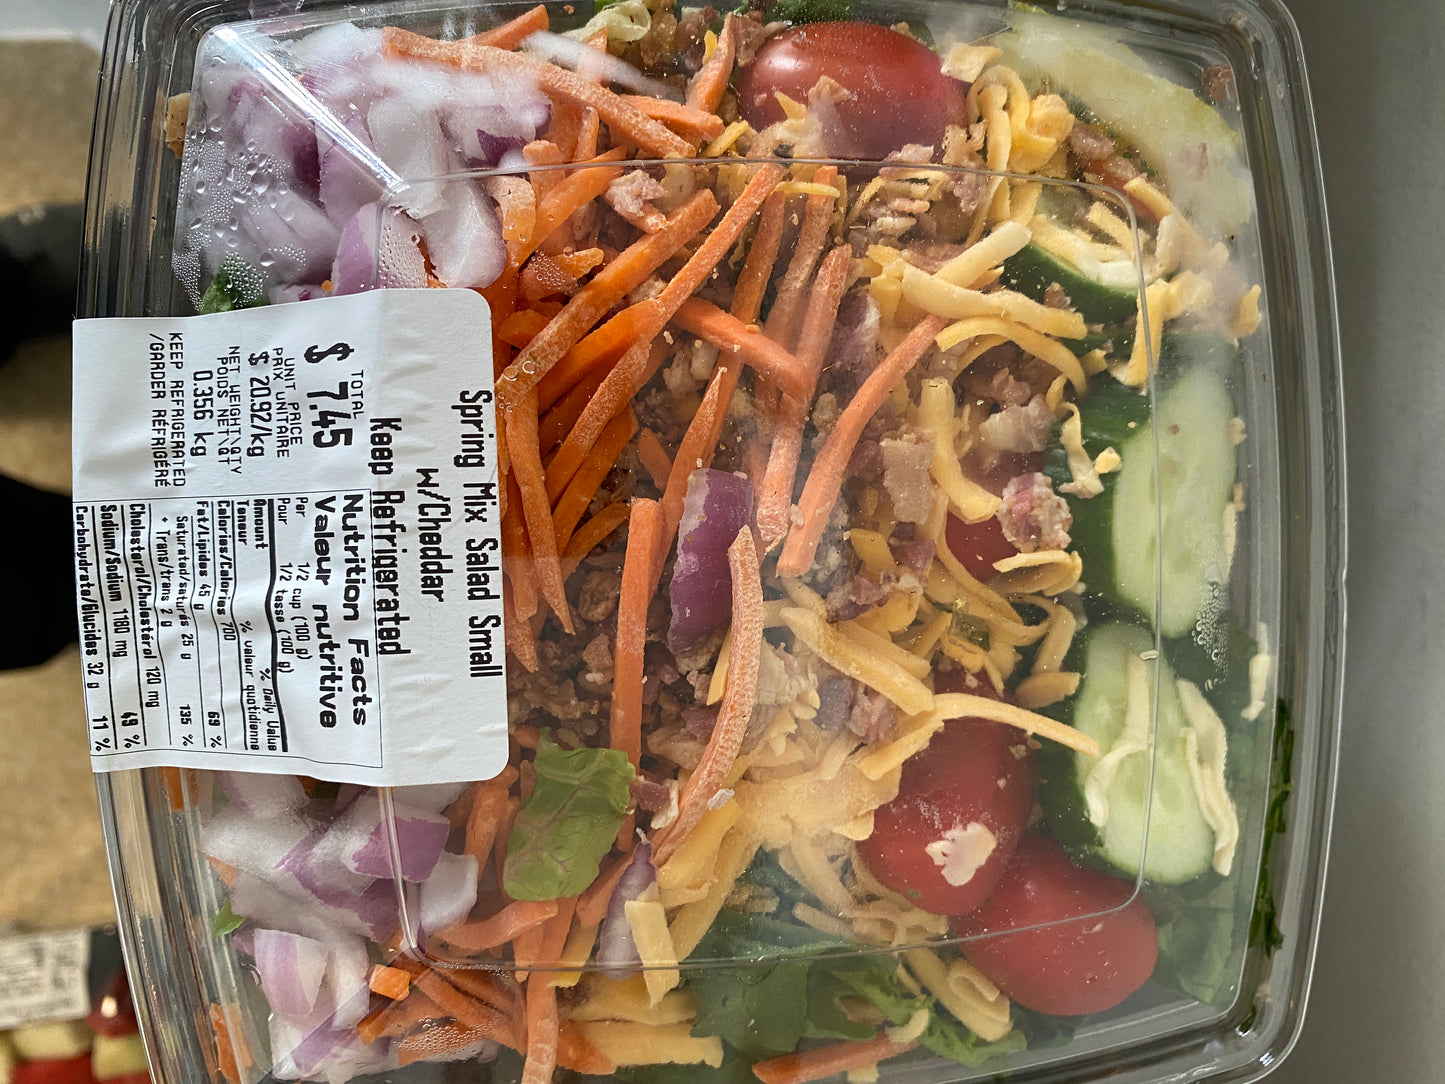 Salad - Large